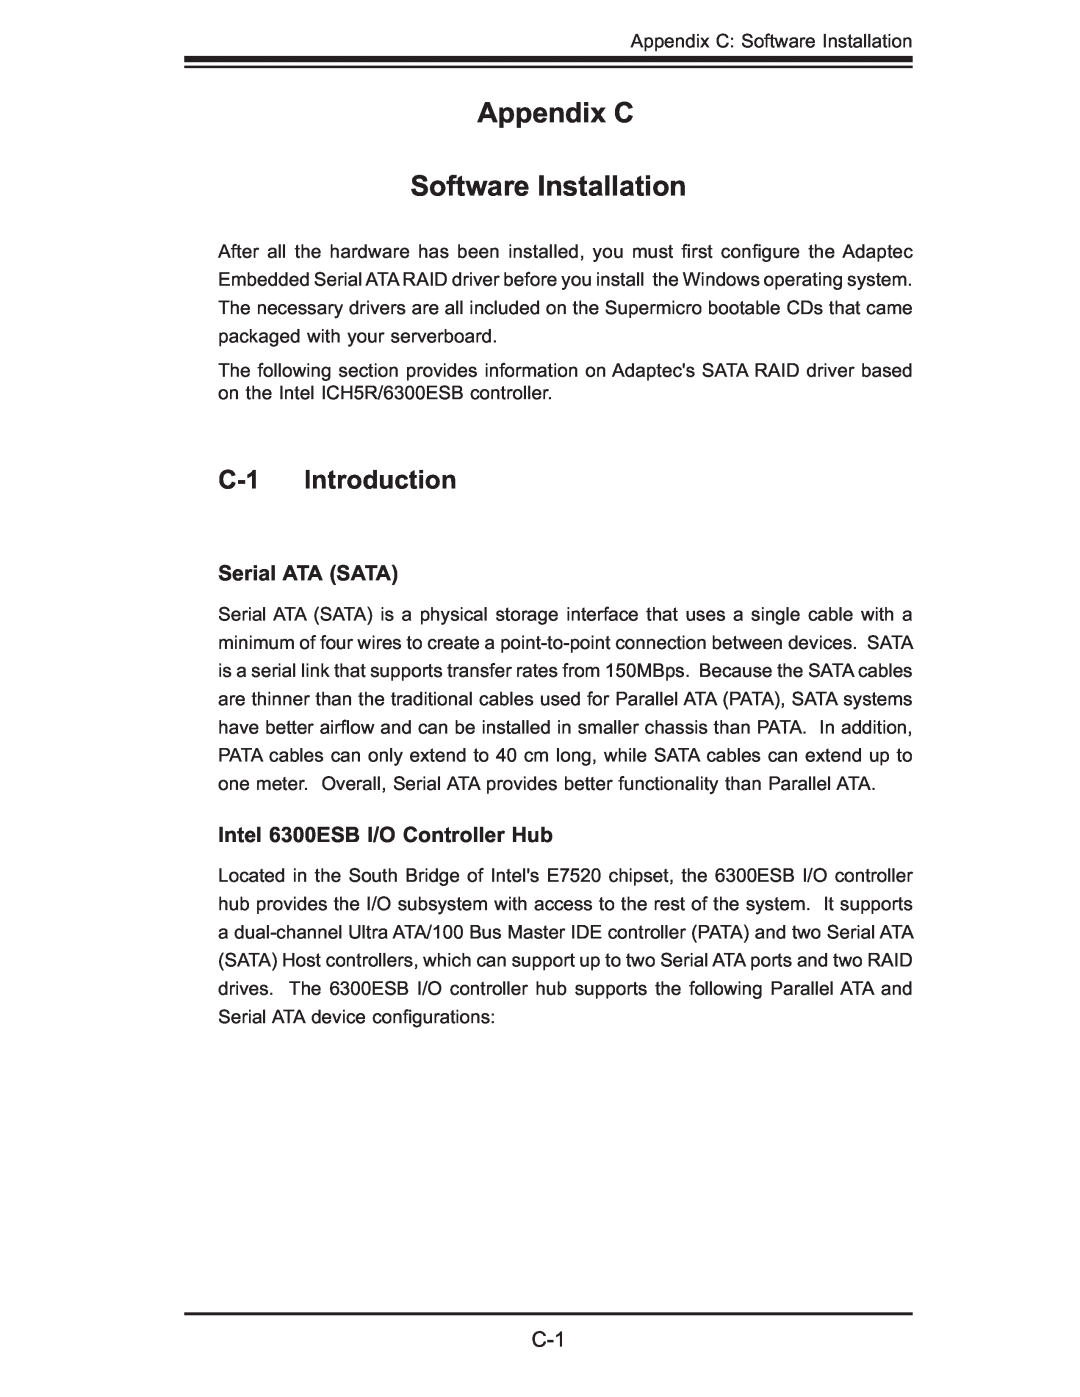 SUPER MICRO Computer 6014L-M manual Appendix C Software Installation, C-1 Introduction, Serial ATA SATA 